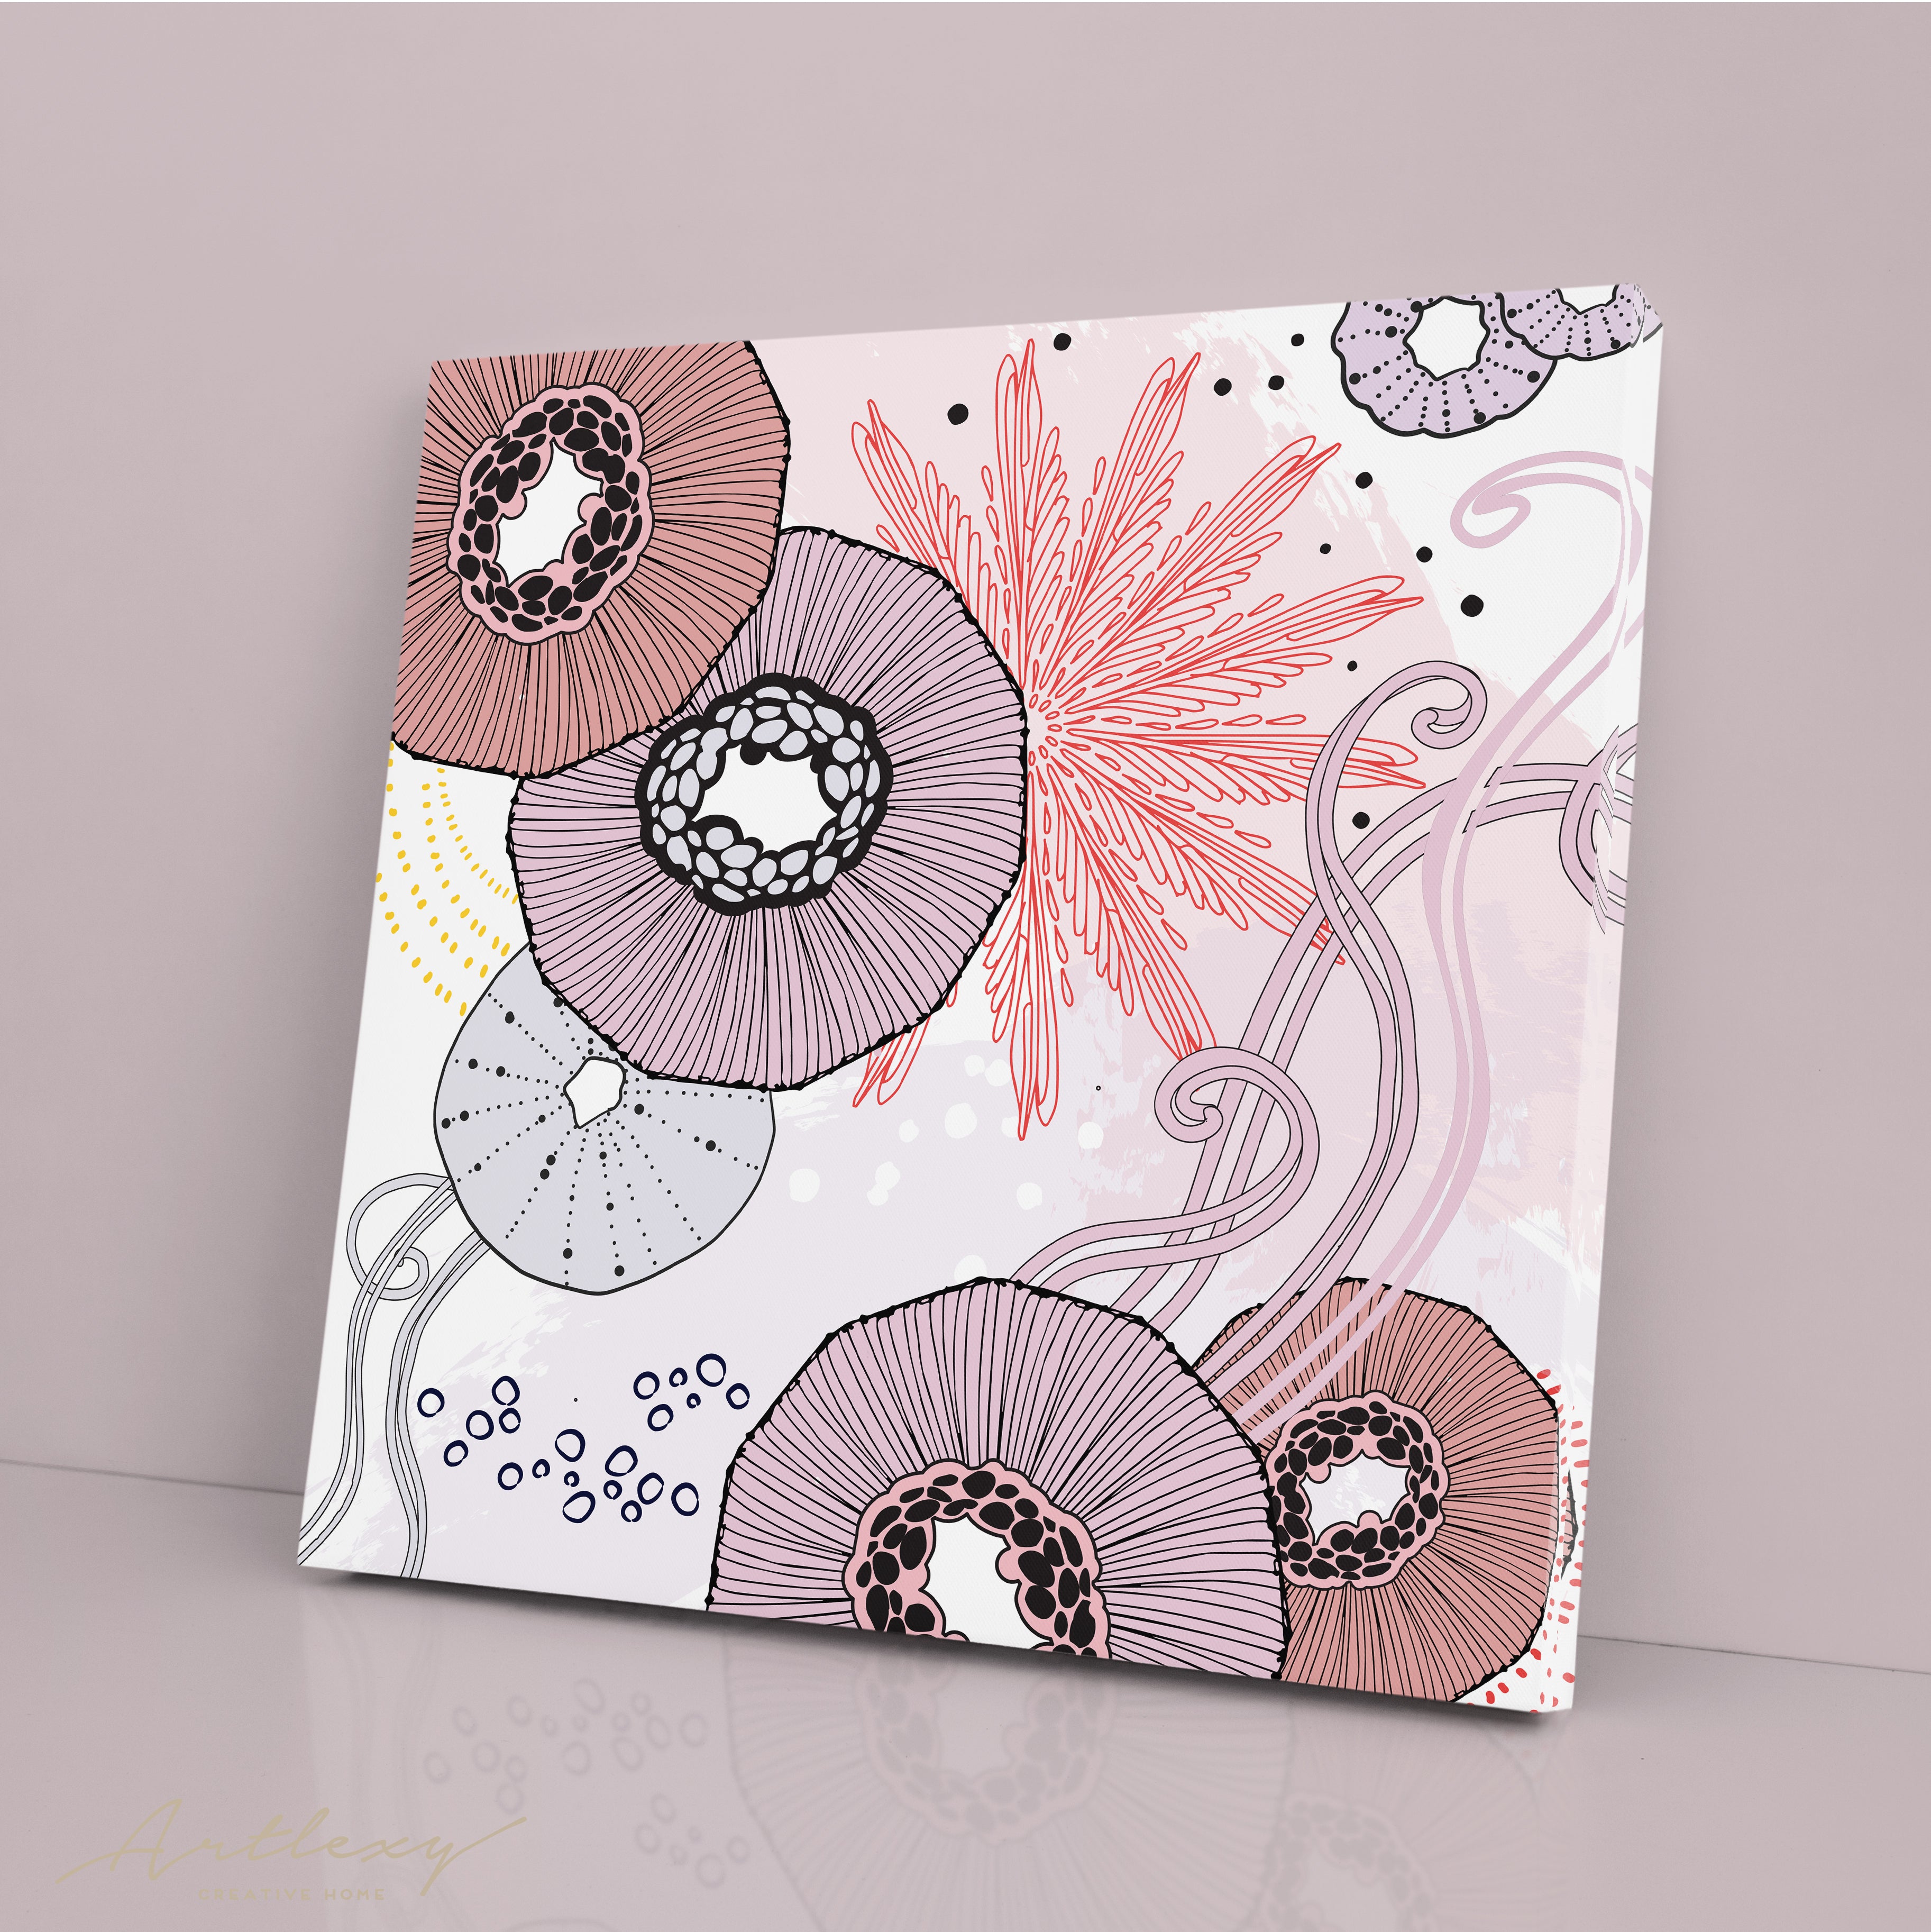 Abstract Geometric Flowers Canvas Print ArtLexy   